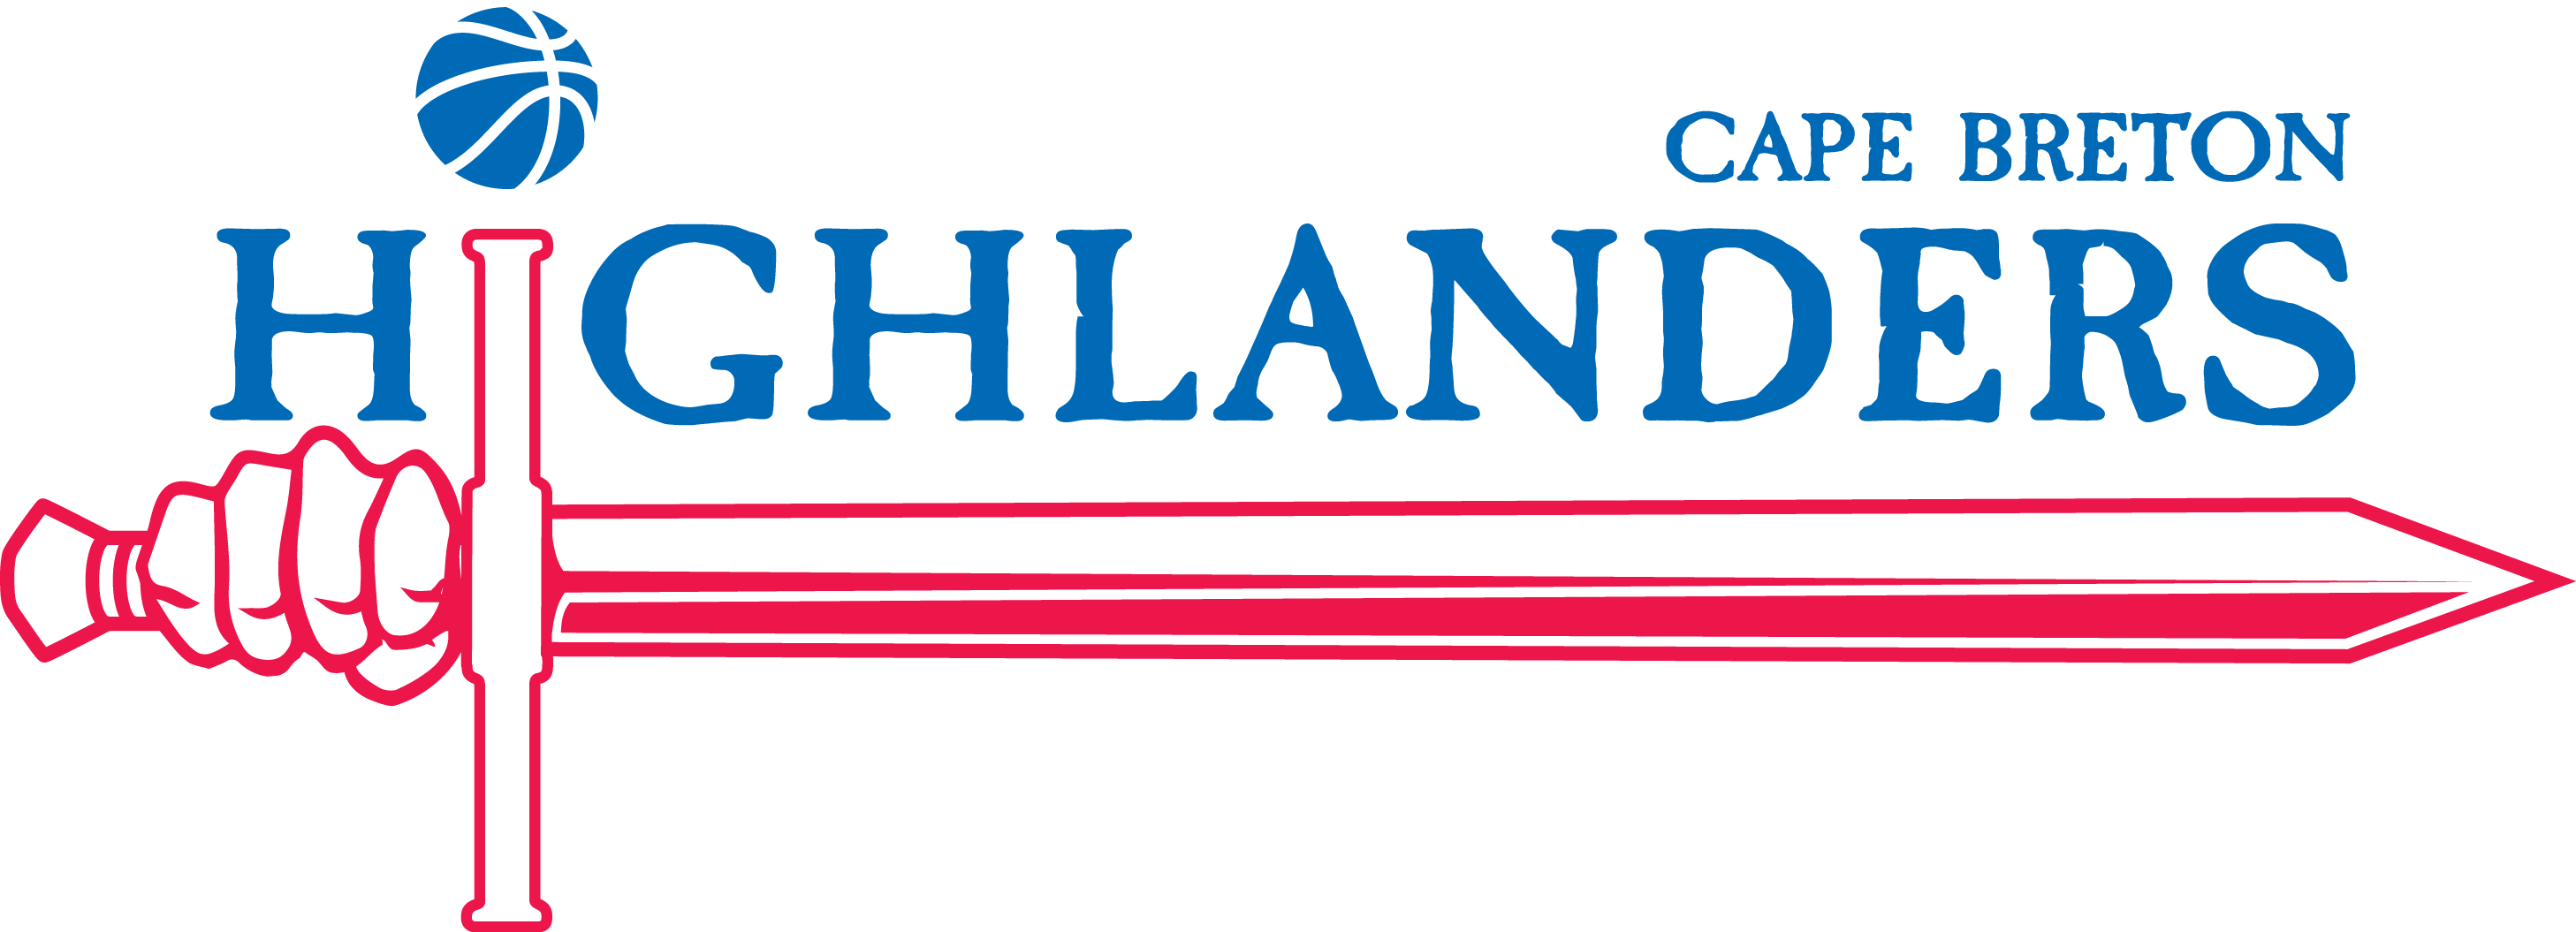 Highlanders Logo - Cape Breton Highlanders | Home